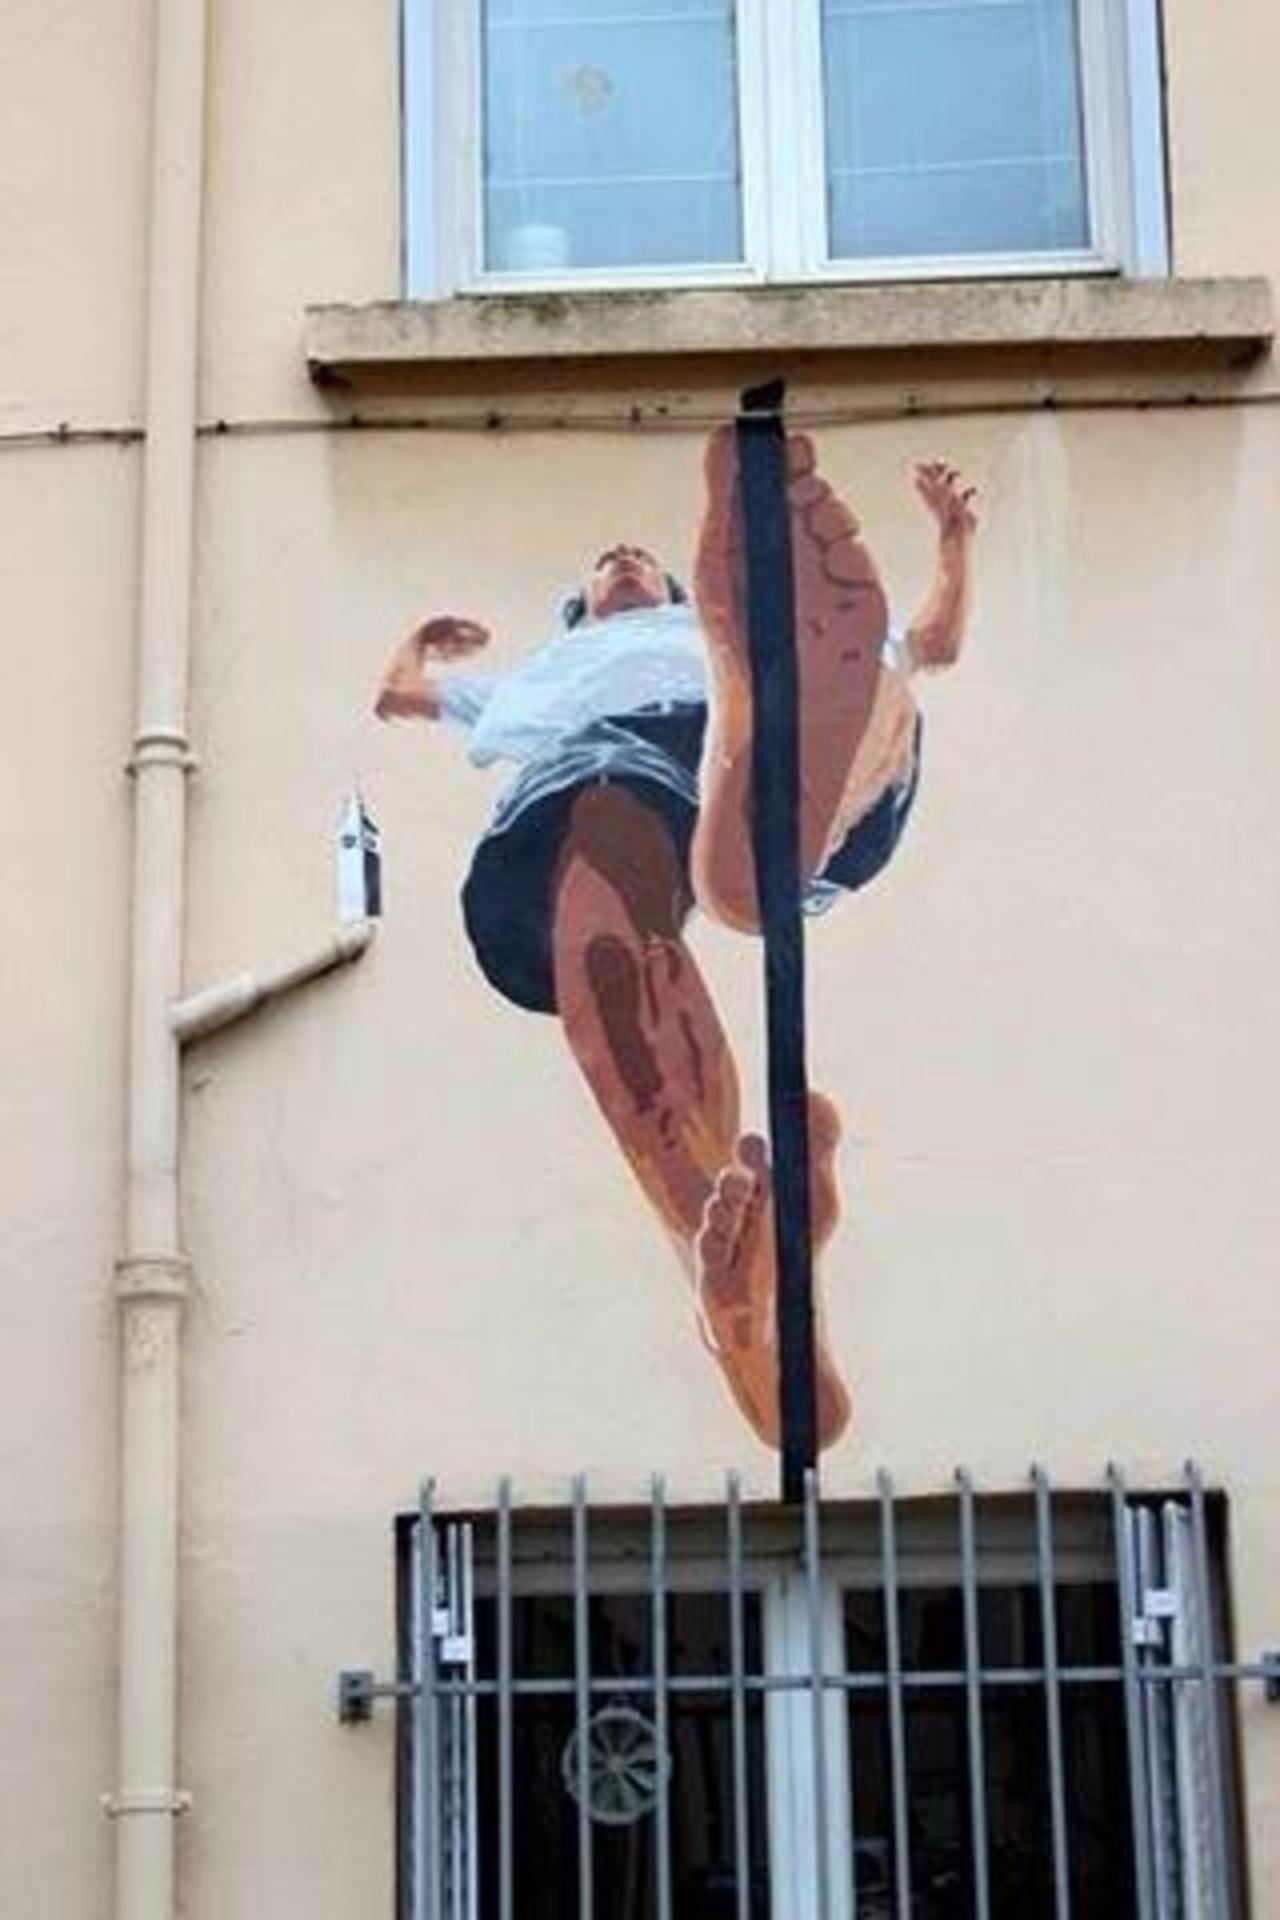 RT @designopinion: Cool Street Art of a Tightrope Walker by artist 'Big Ben' in Lyon, France #art #mural #graffiti #streetart http://t.co/AxZkwyPsce